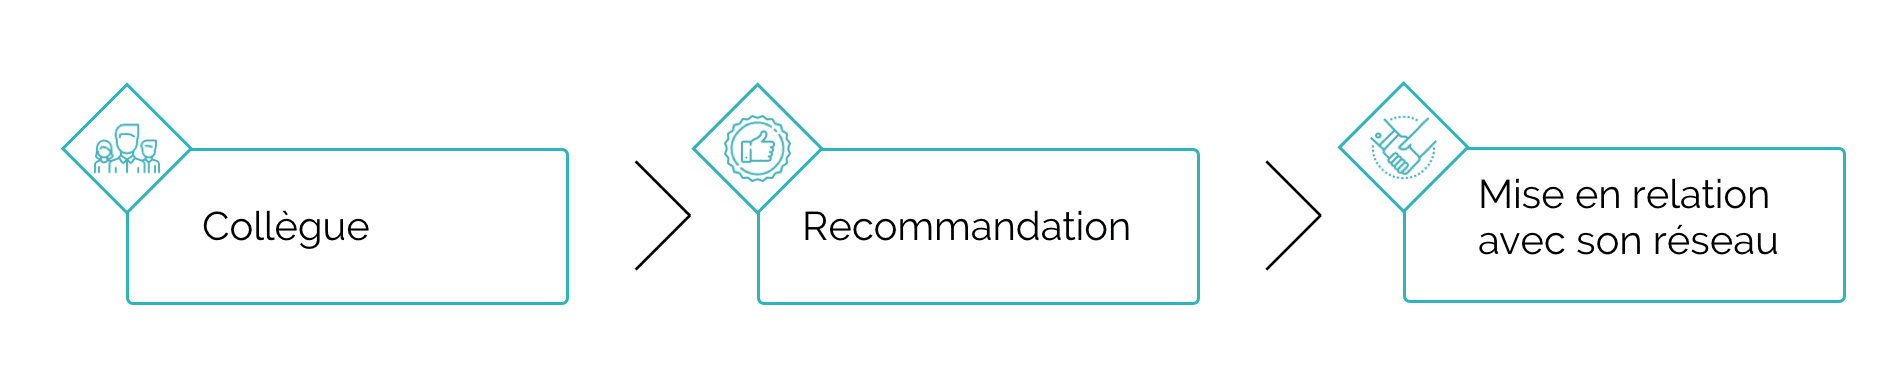 recommandation